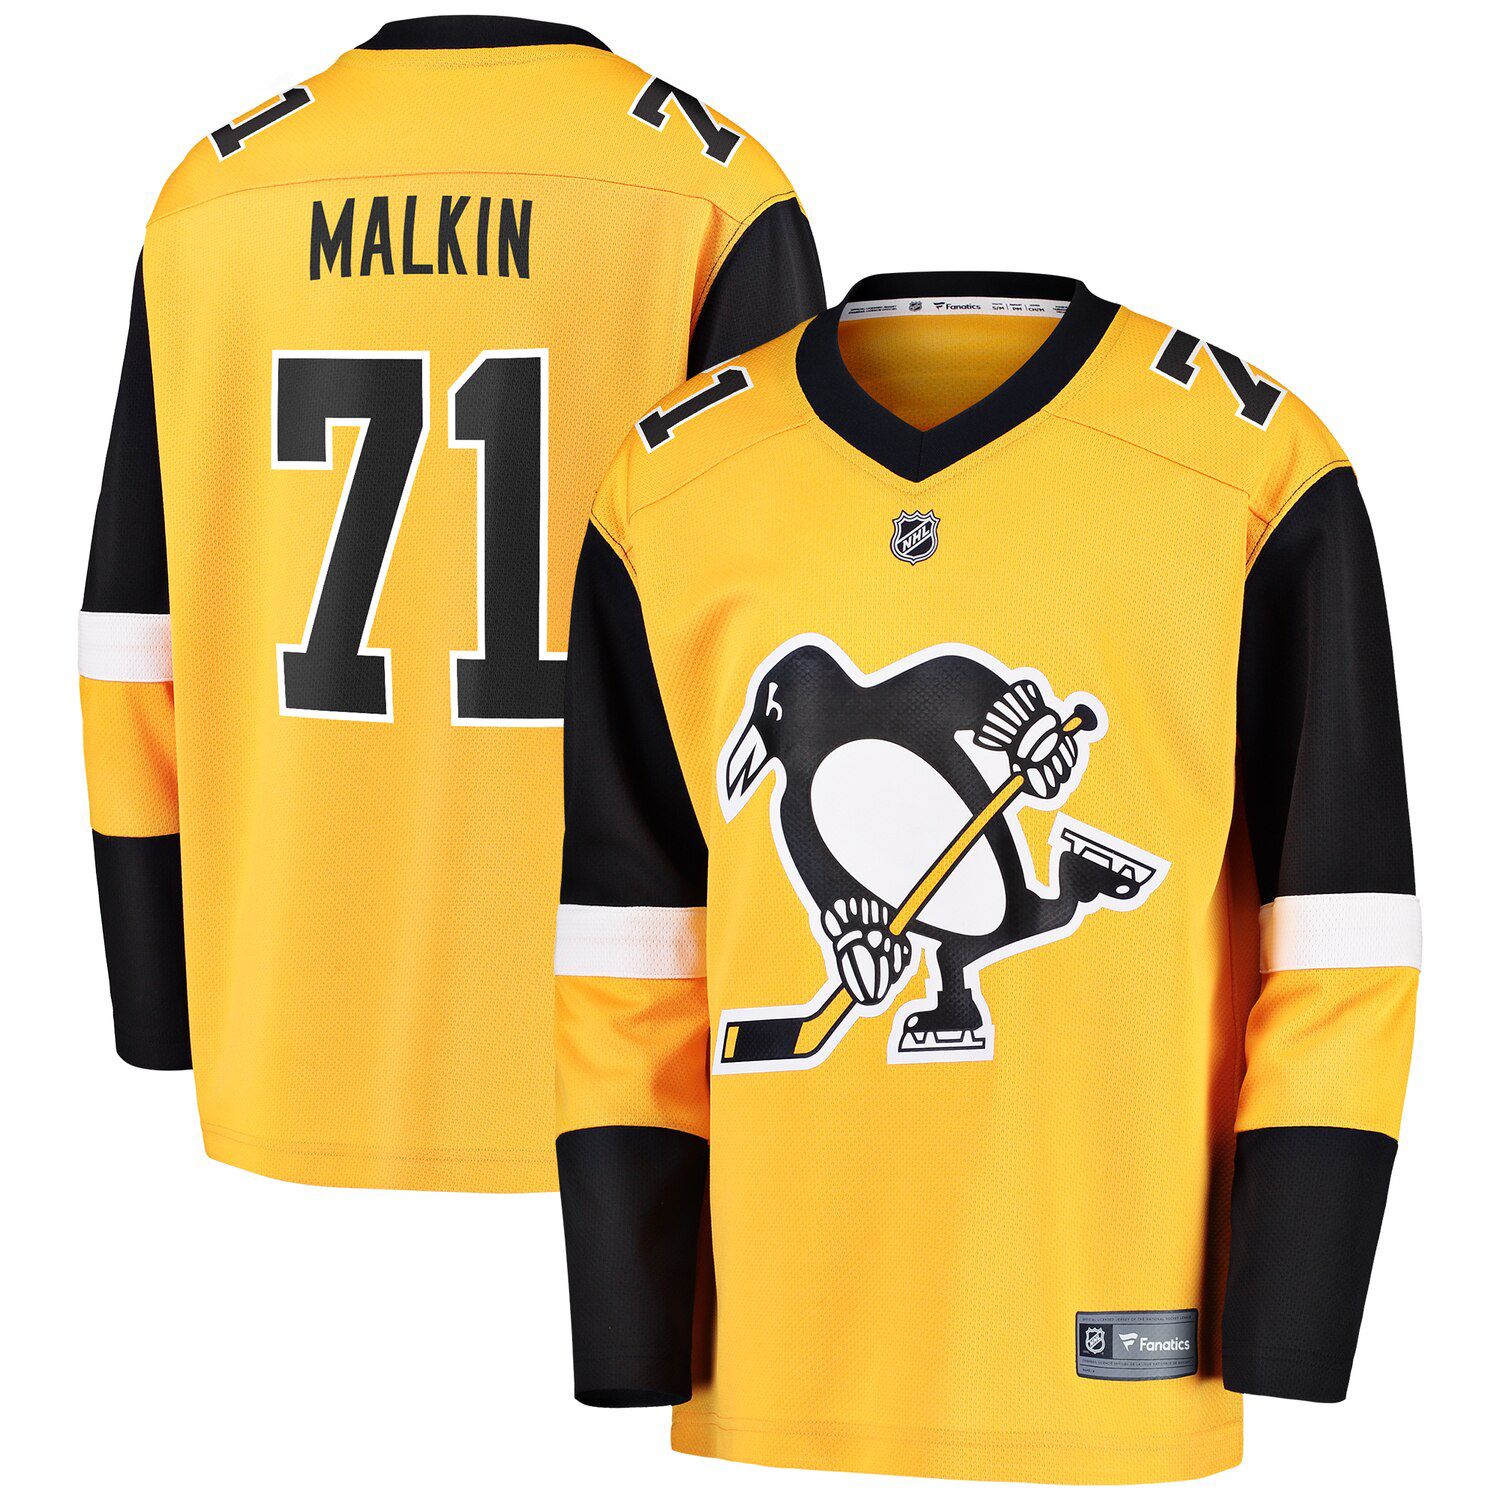 penguins yellow jersey